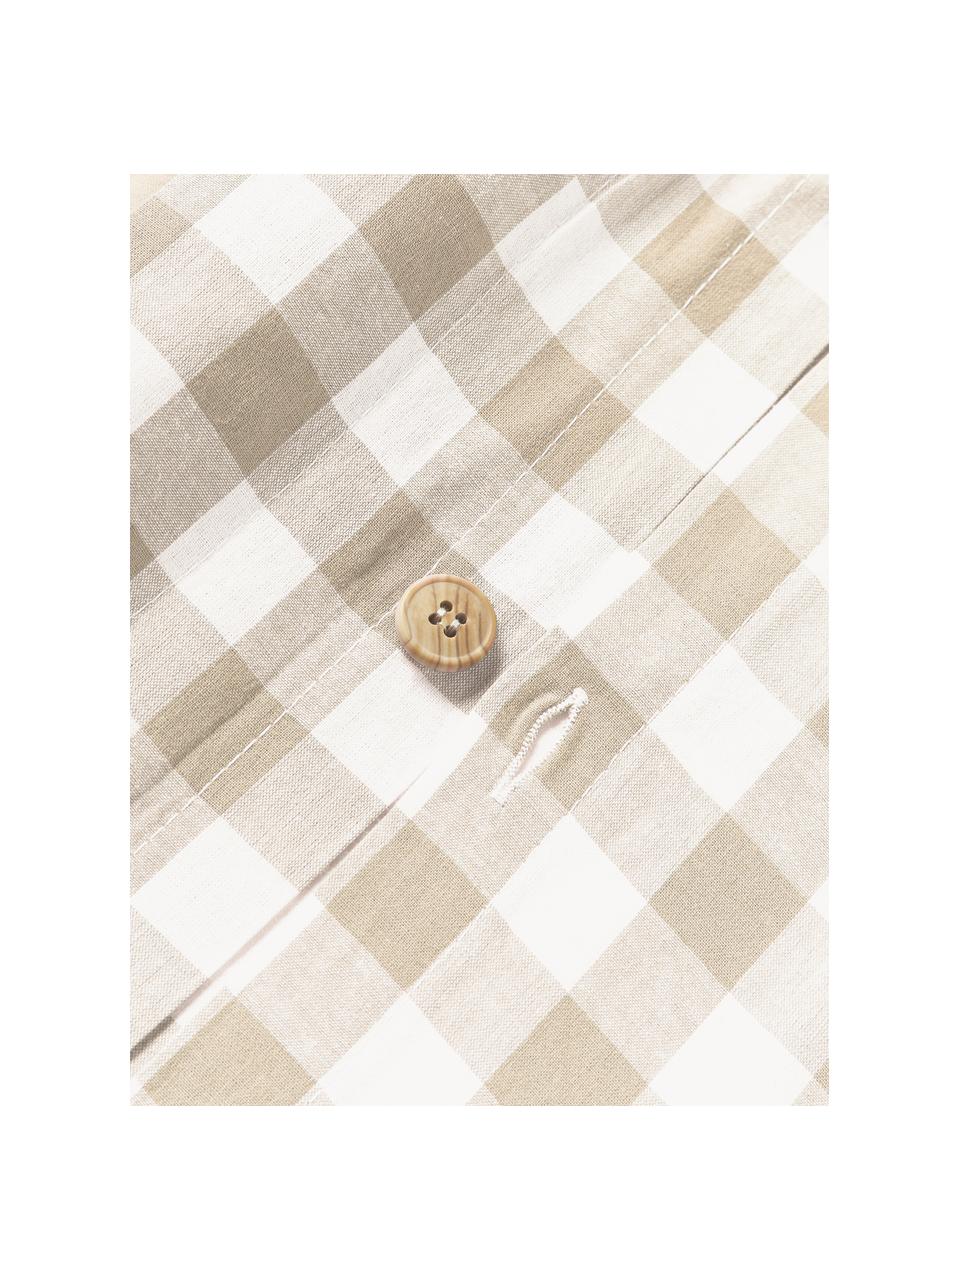 Karierter Baumwoll-Bettdeckenbezug Nels, Webart: Renforcé Fadendichte 144 , Beigetöne, Weiß, B 200 x L 200 cm